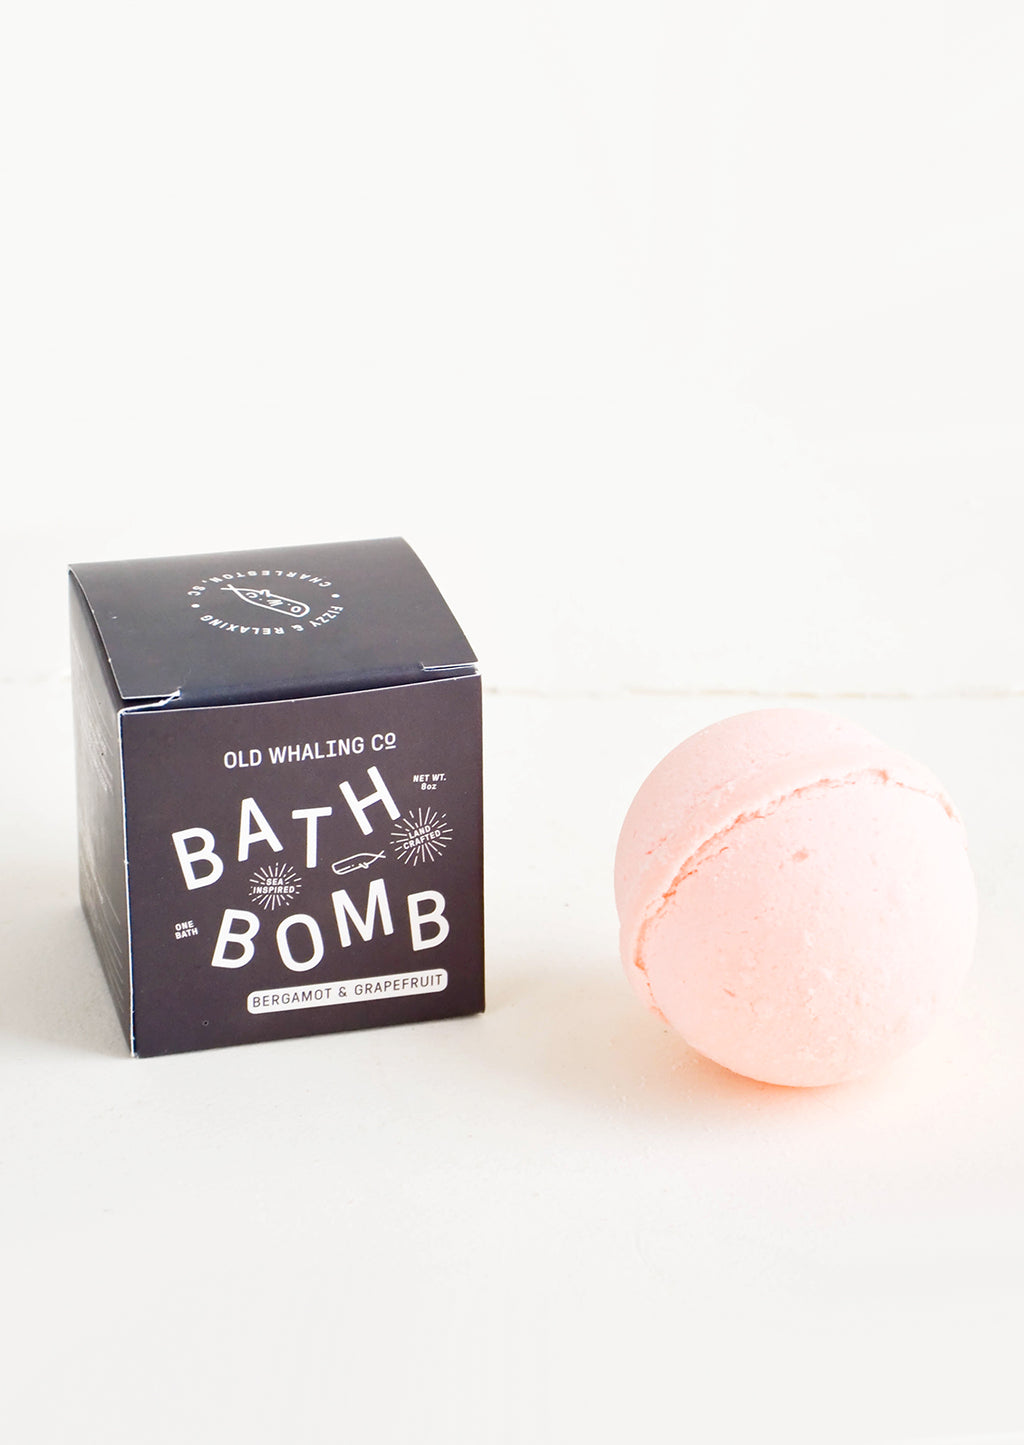 Bergamot & Grapefruit: Pink colored, round bath bomb with black box packaging